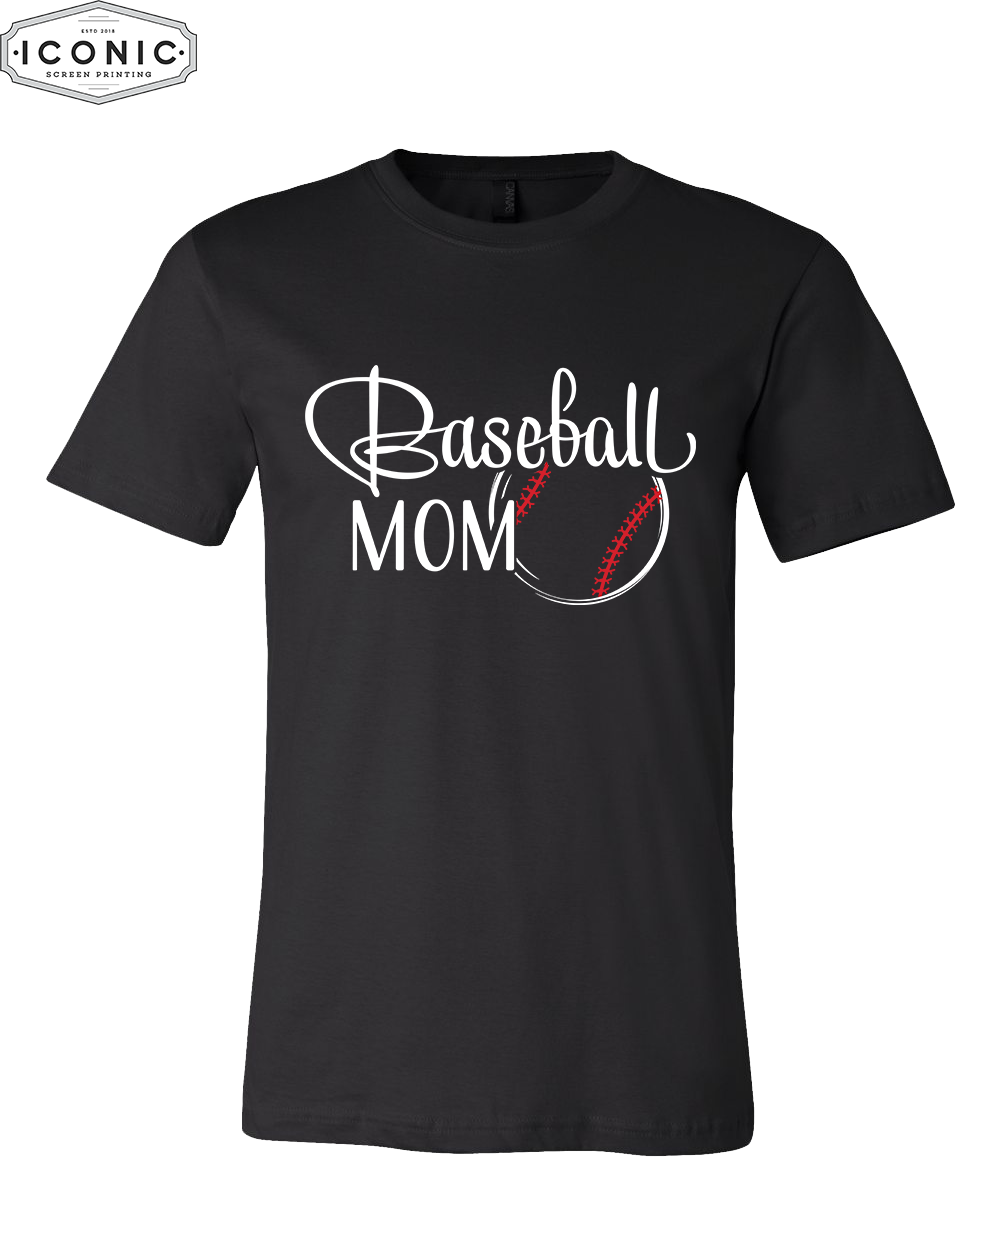 Baseball Mom - Unisex Jersey Tee